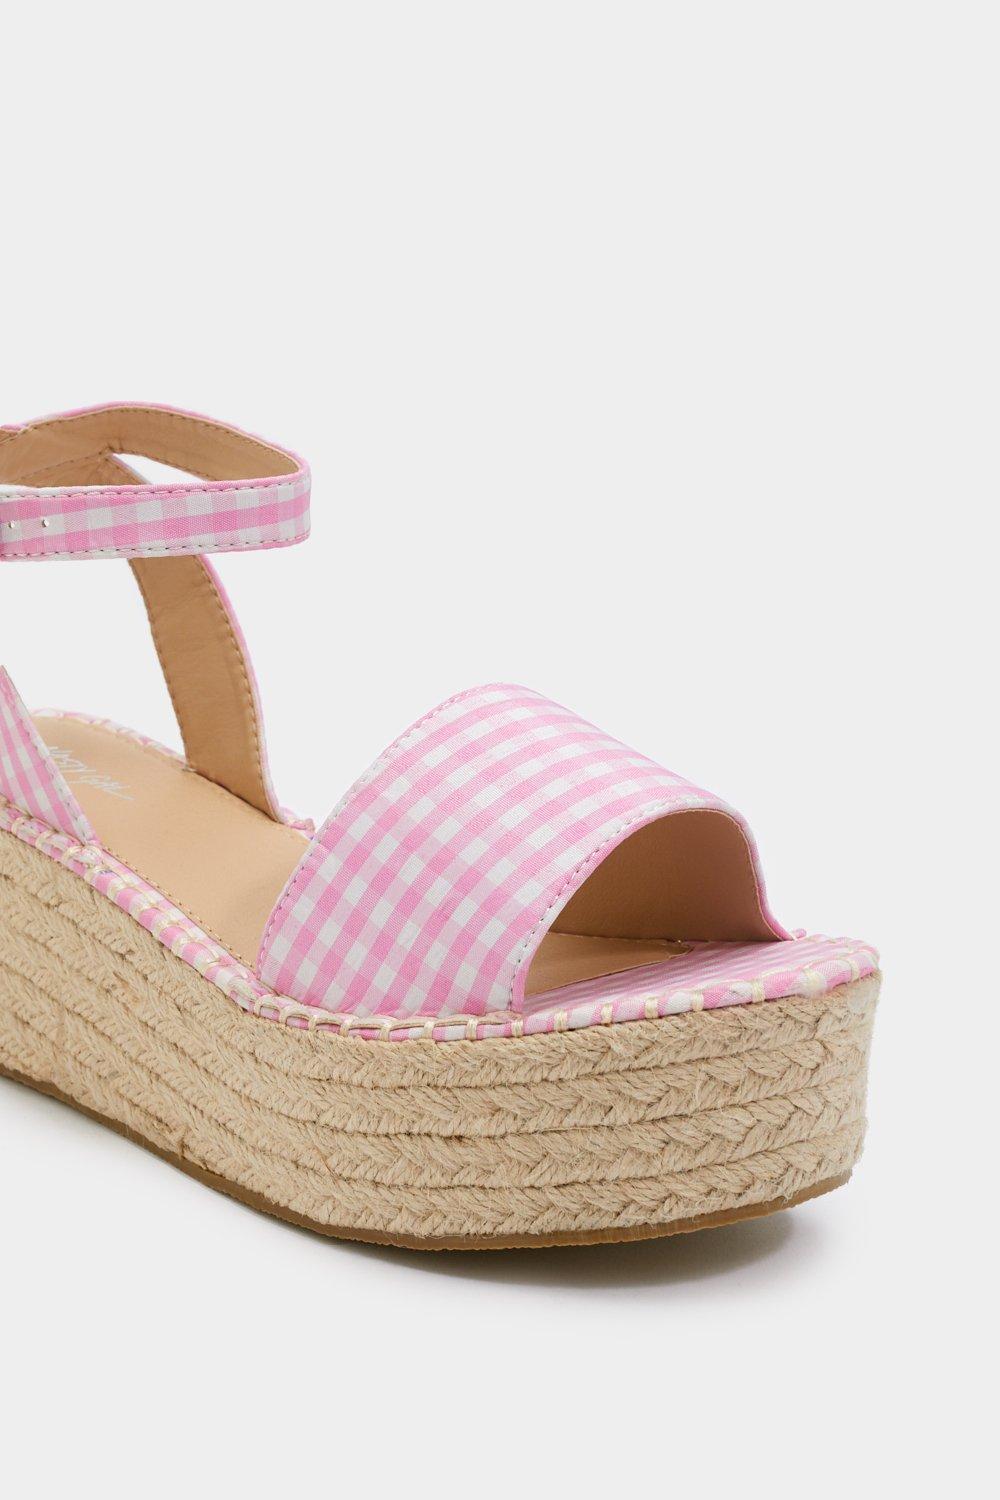 pink gingham sandals